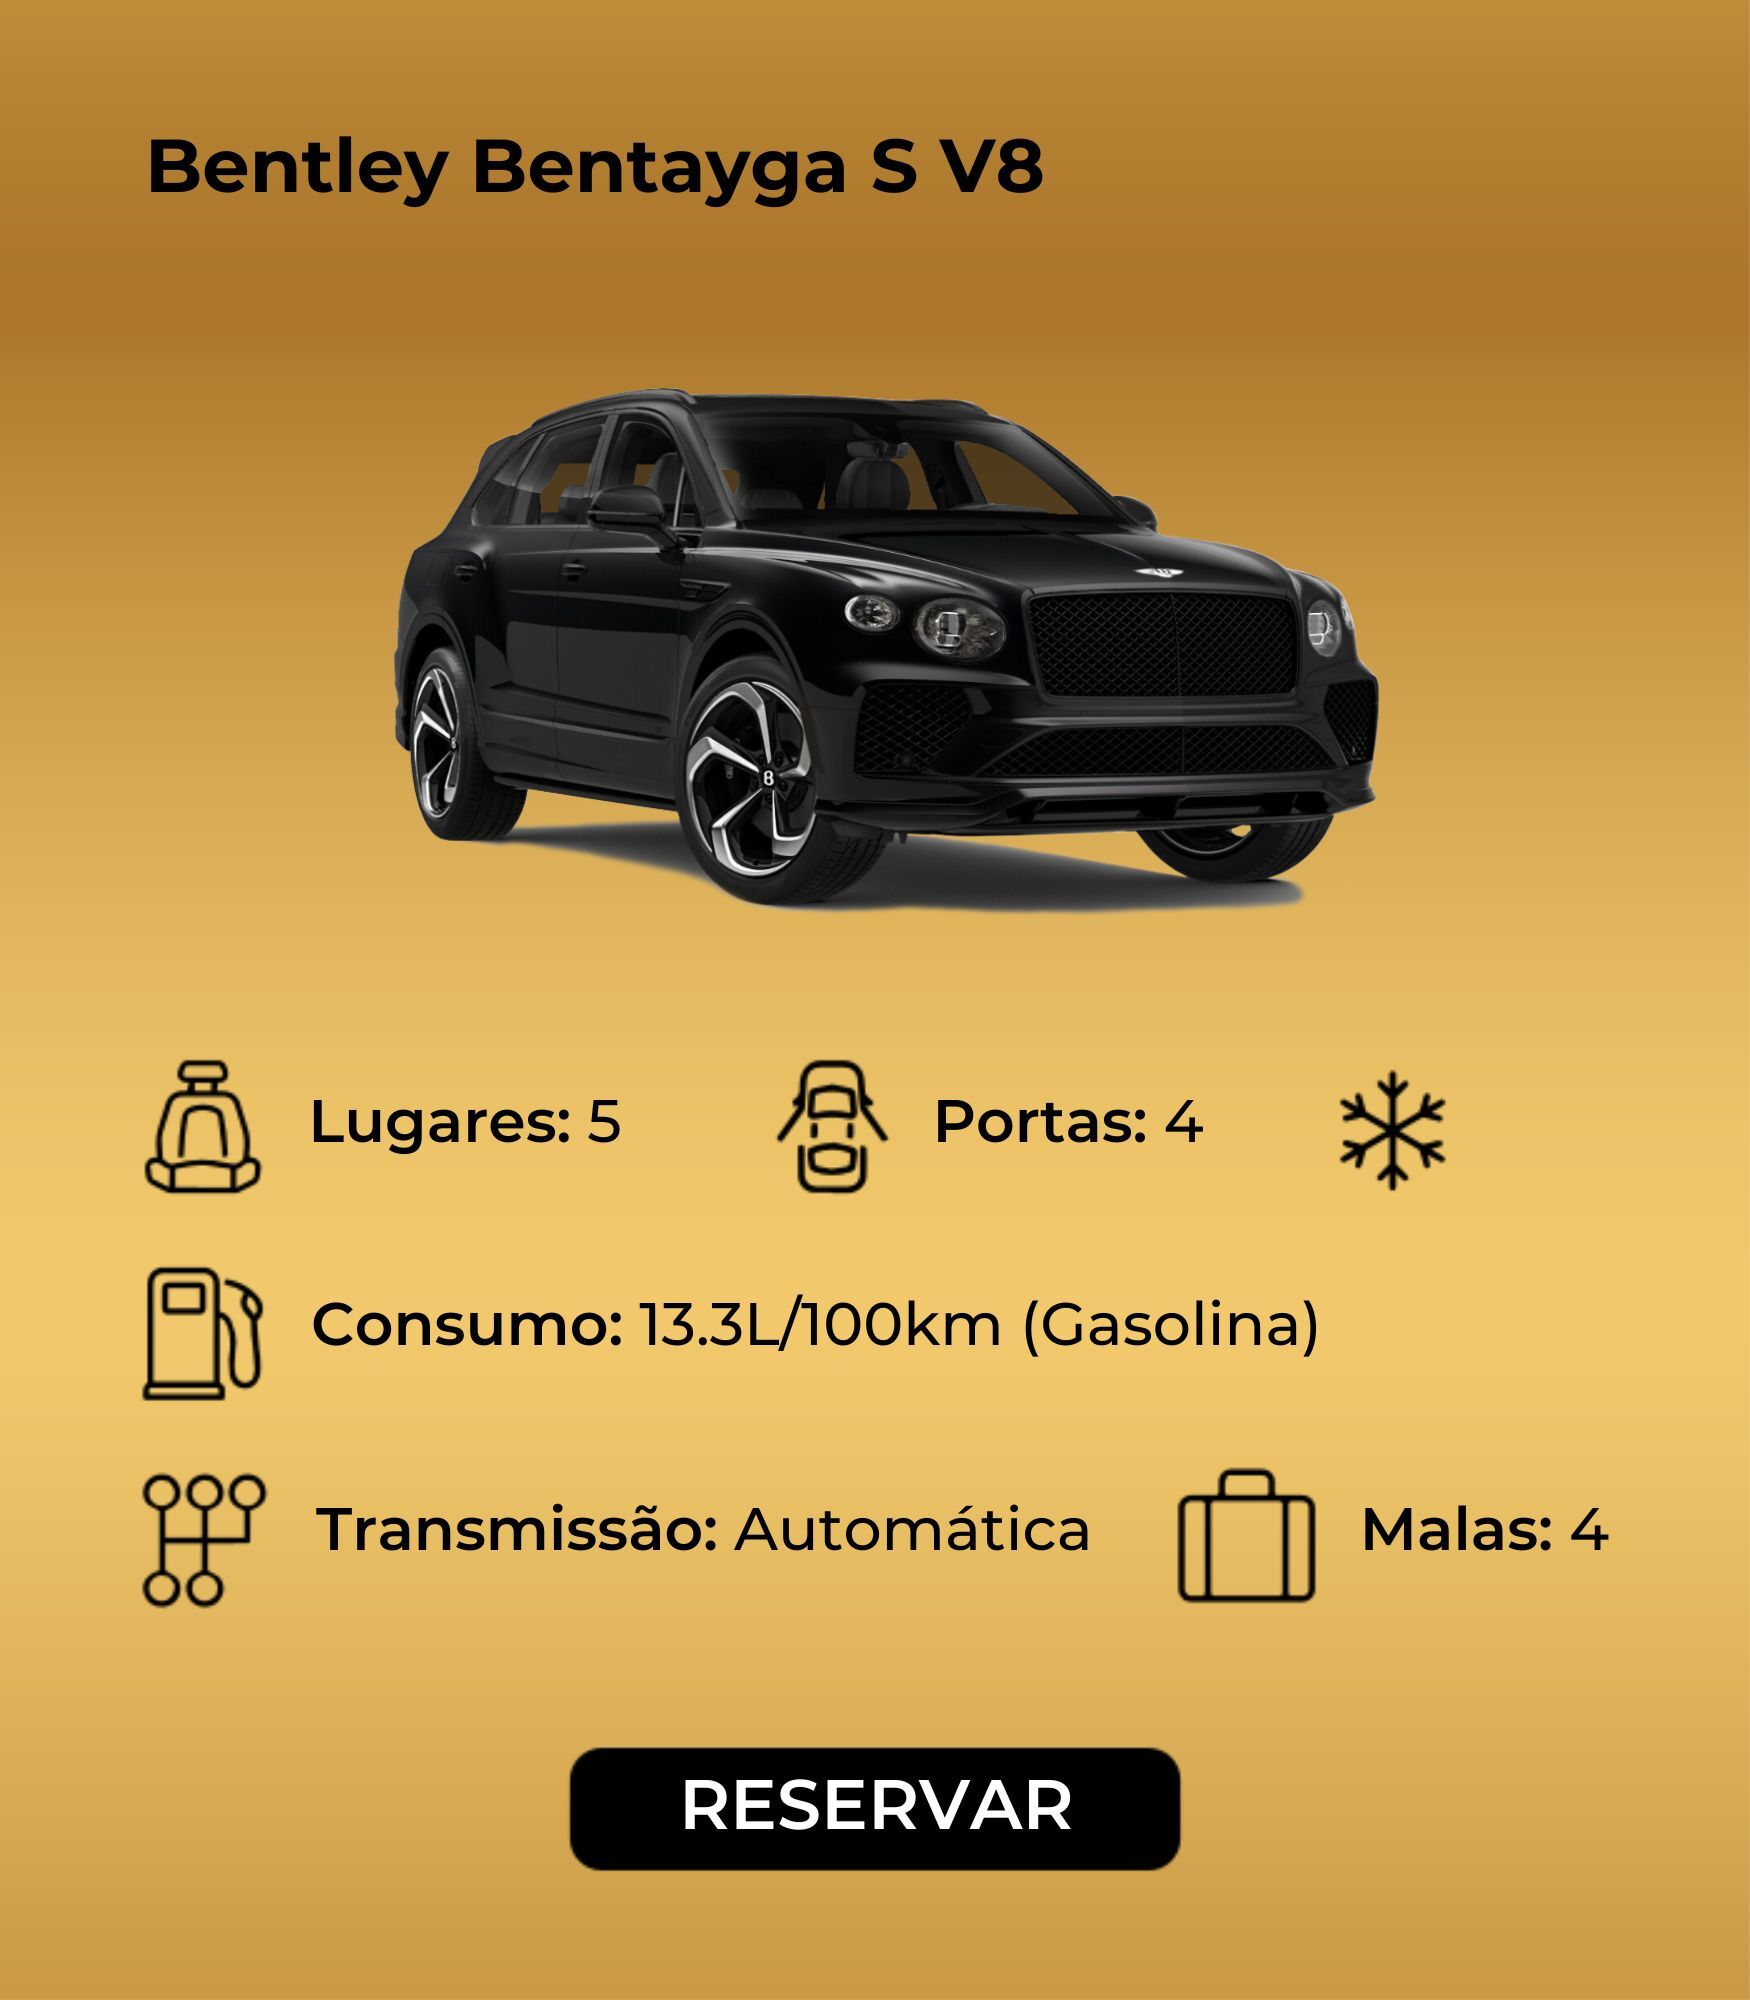 Bentley Bentayga S V8